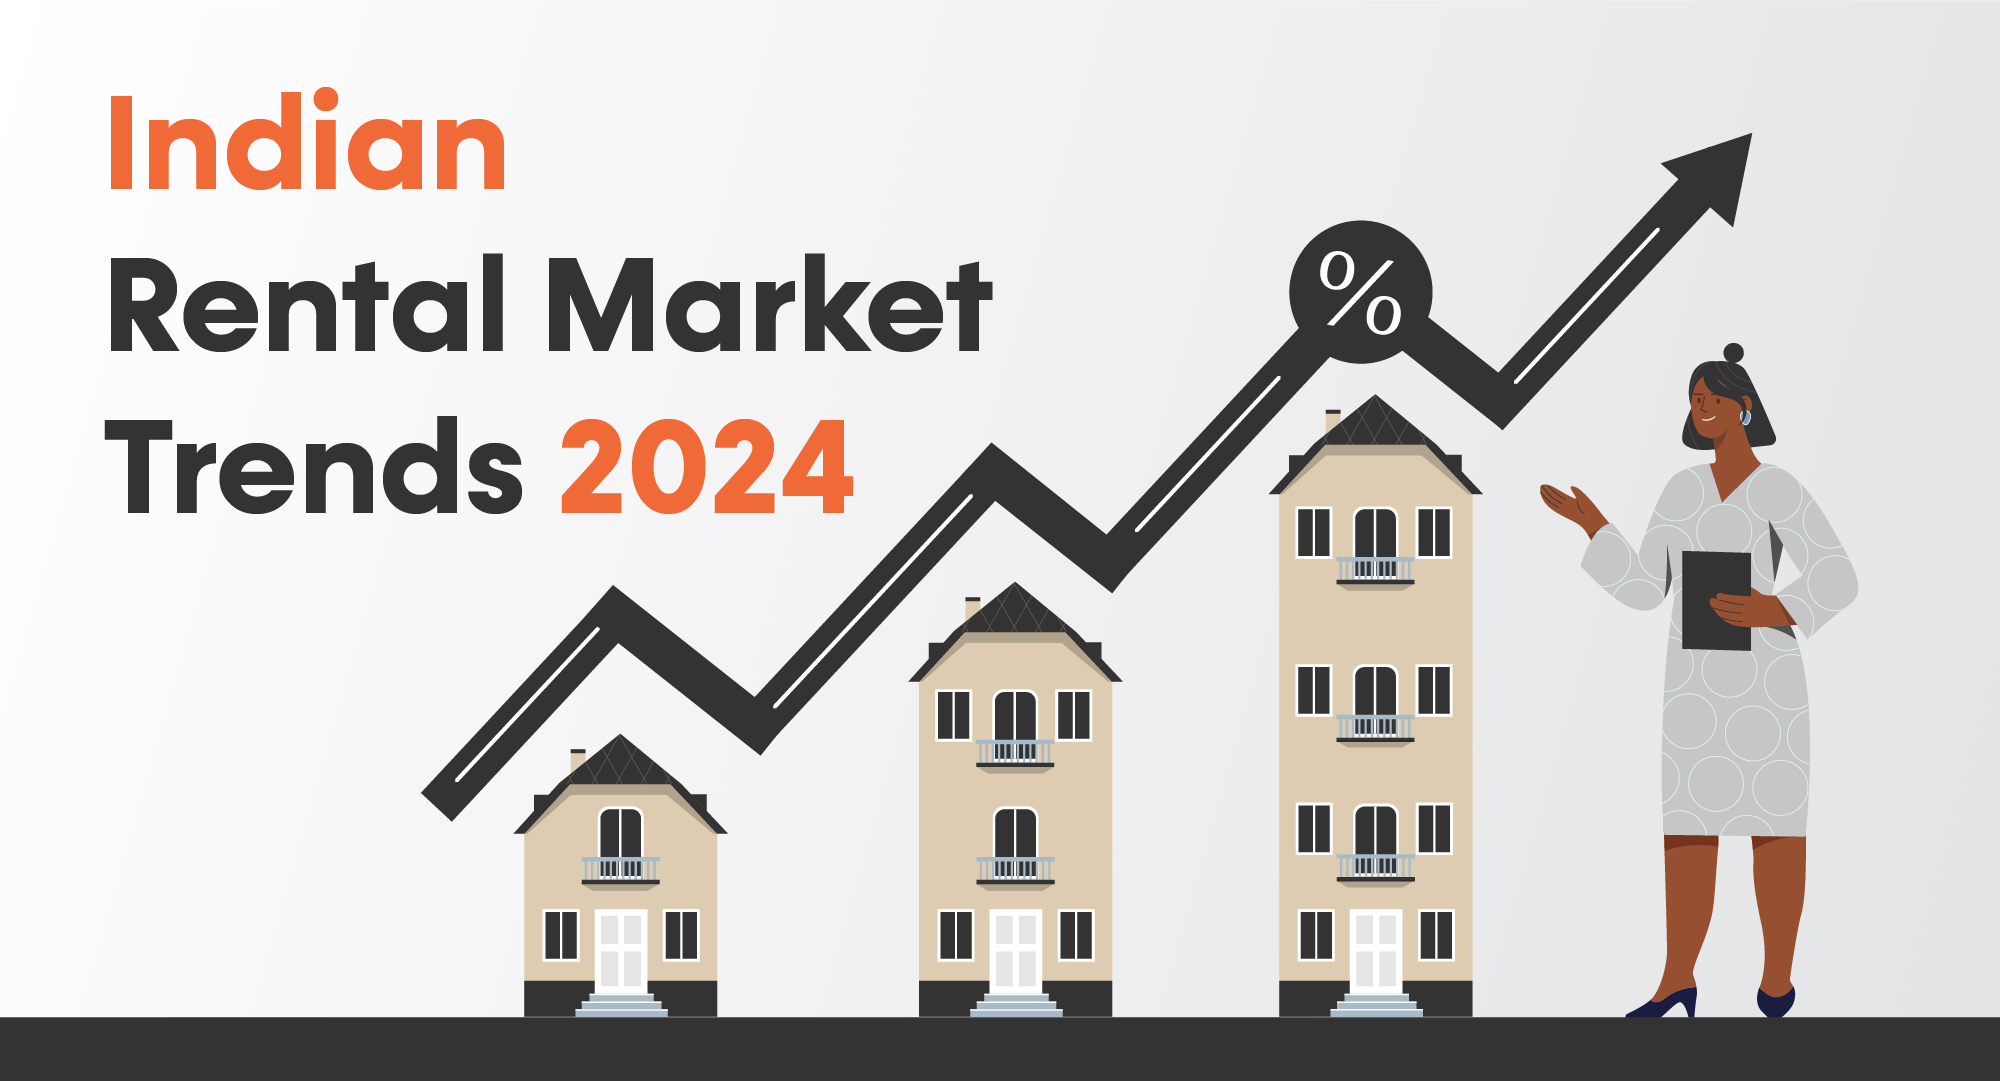 Indian Rental Market Trends 2024